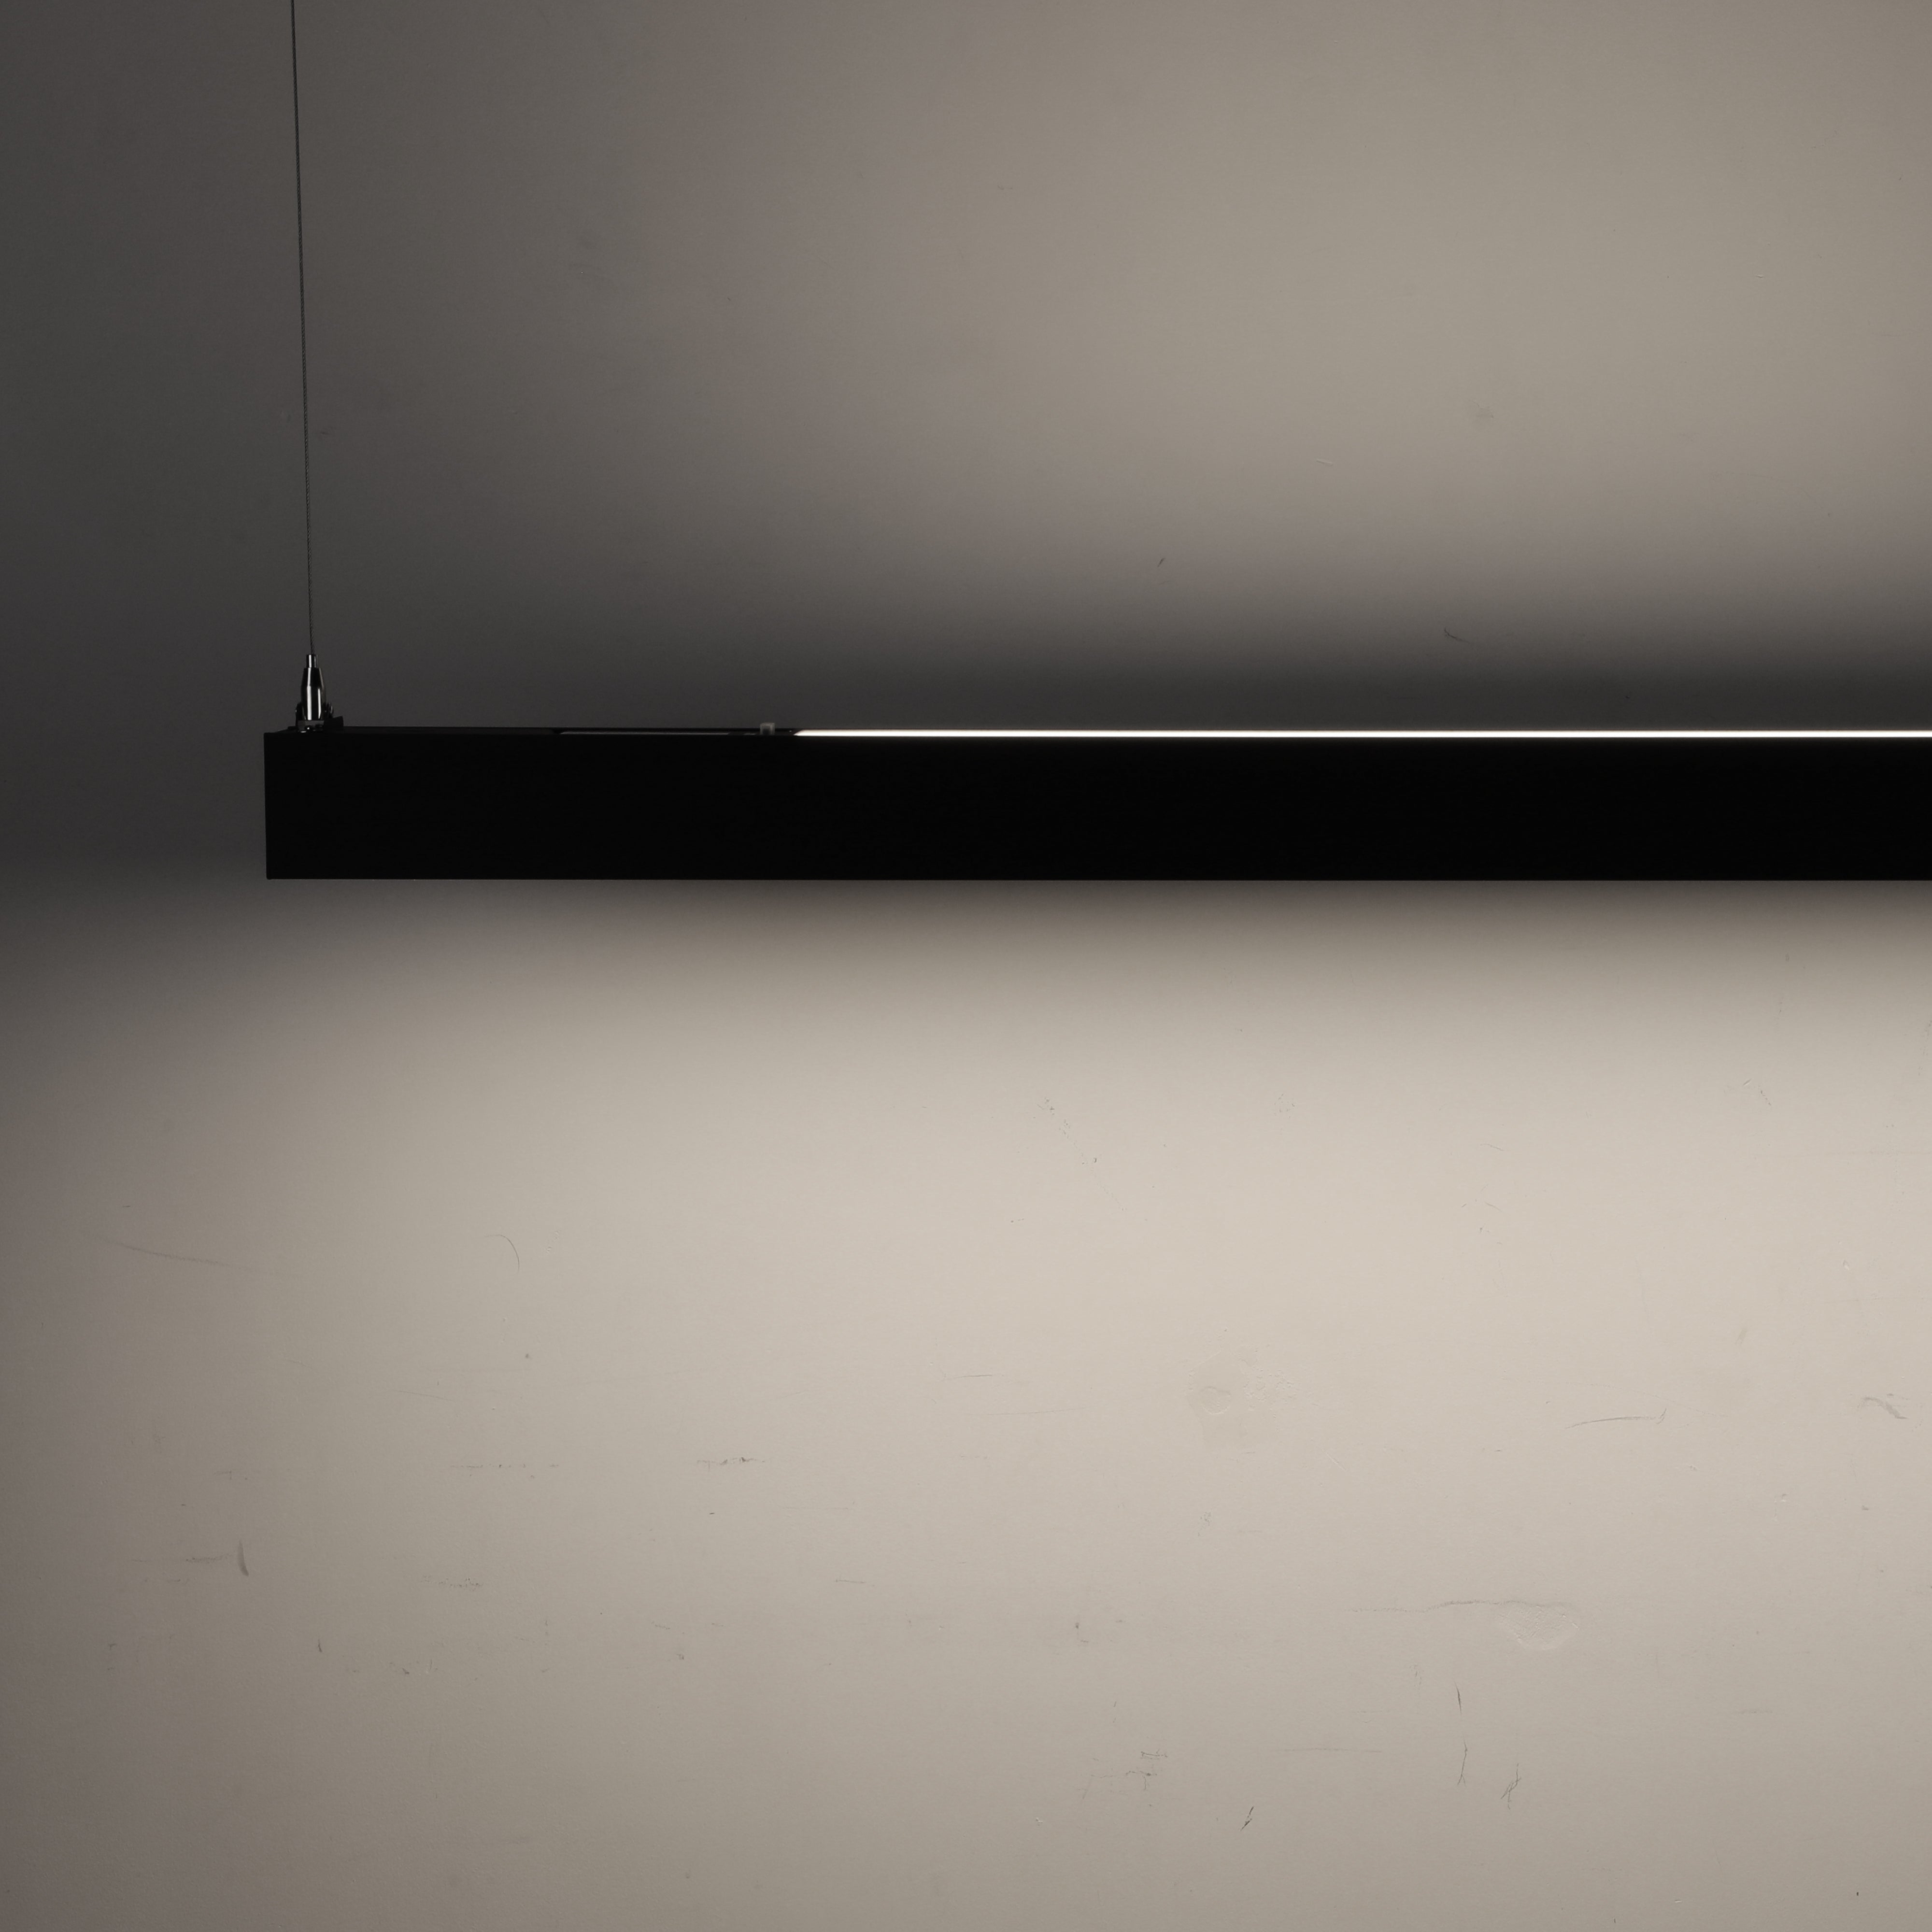 ElegaLux+ Pro 4' LED Linear Light - Black - 55W - Adjustable CCT